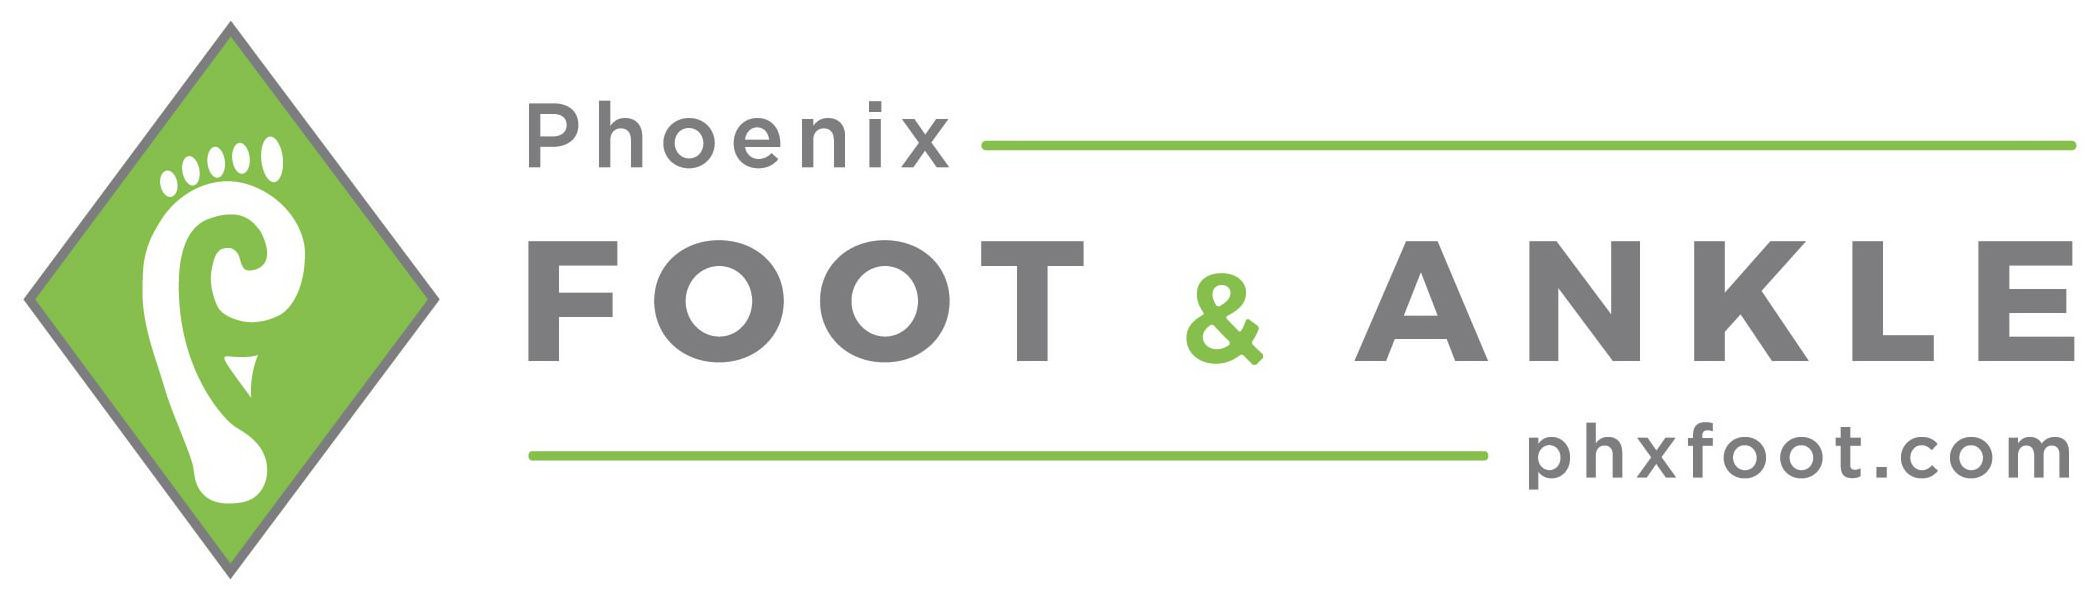 Trademark Logo PHOENIX FOOT & ANKLE PHXFOOT.COM